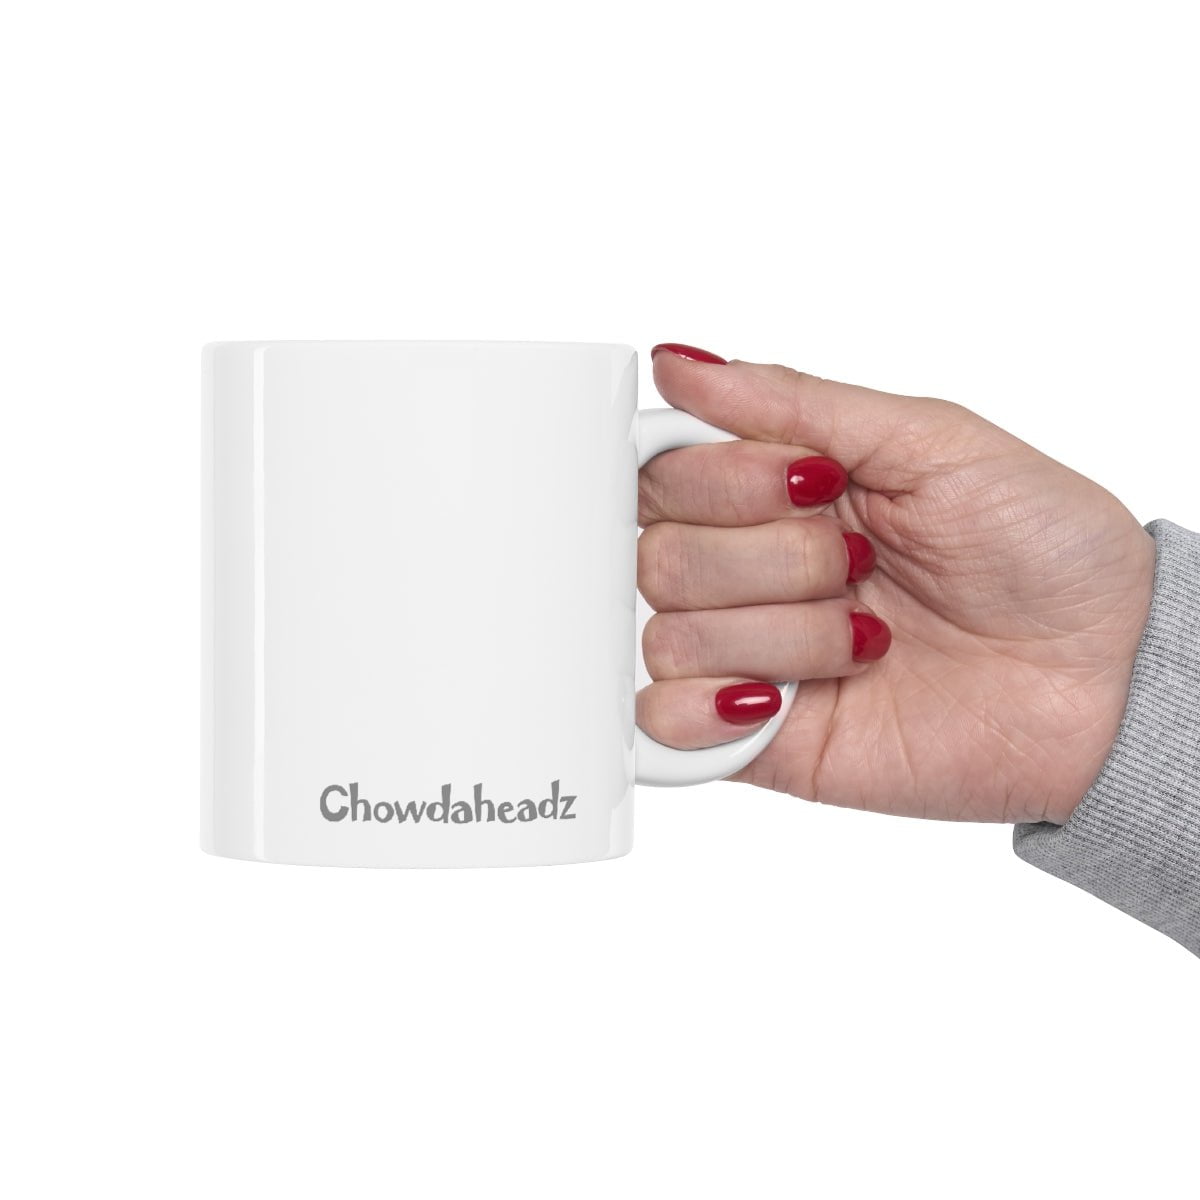 DIBS 11oz Coffee Mug - Chowdaheadz